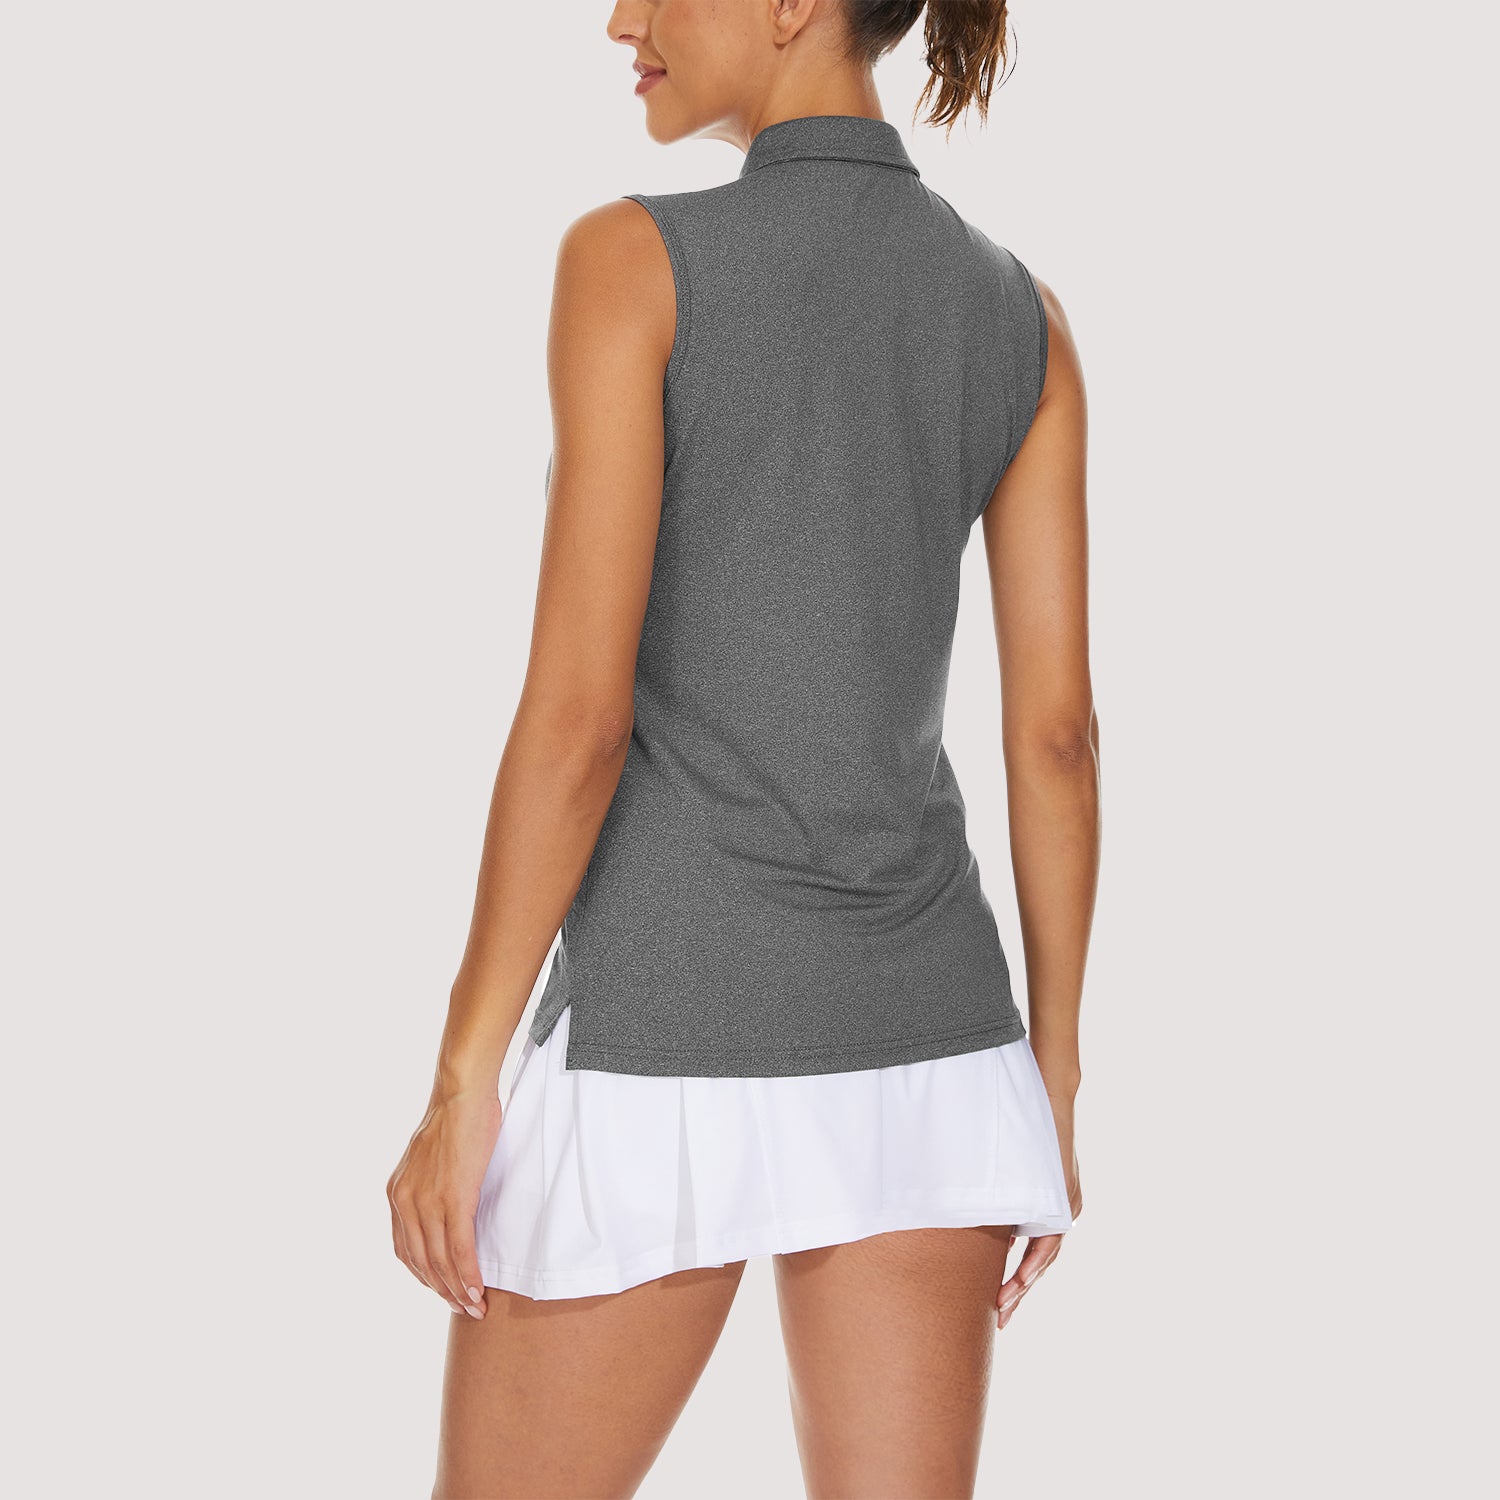 Women V-neck Sleeveless Golf Polo T-Shirt Raceback Tennis Outdoor